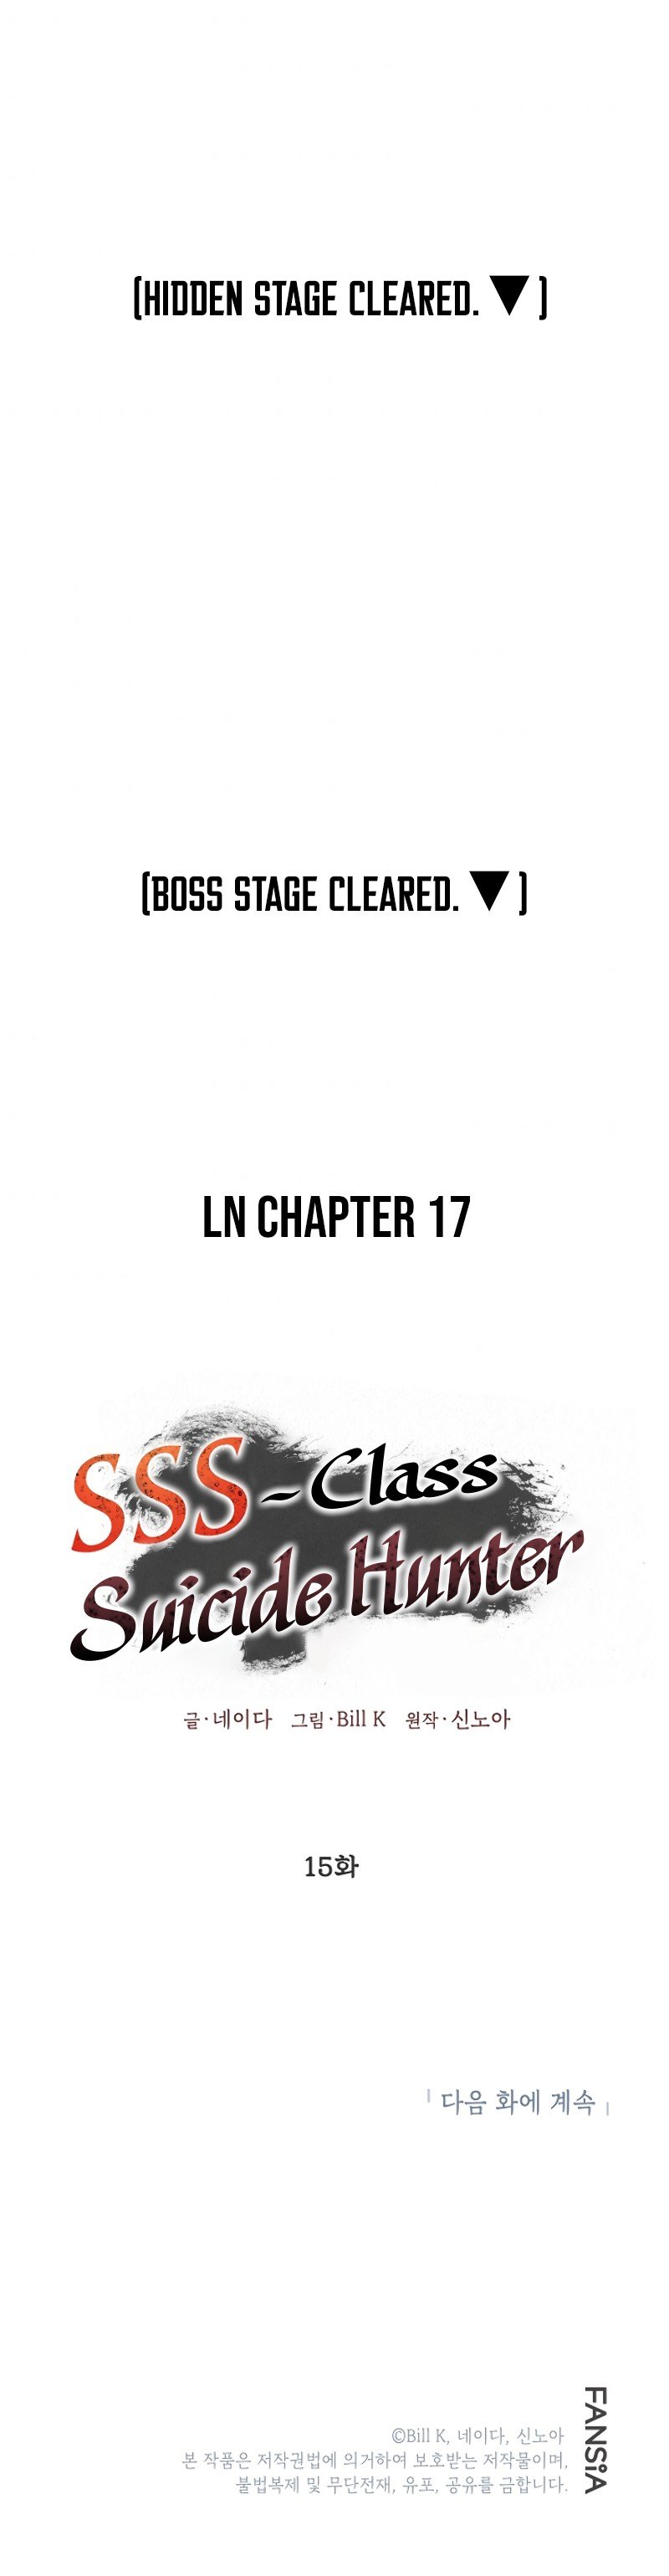 sss-class-suicide-hunter-chap-15-13